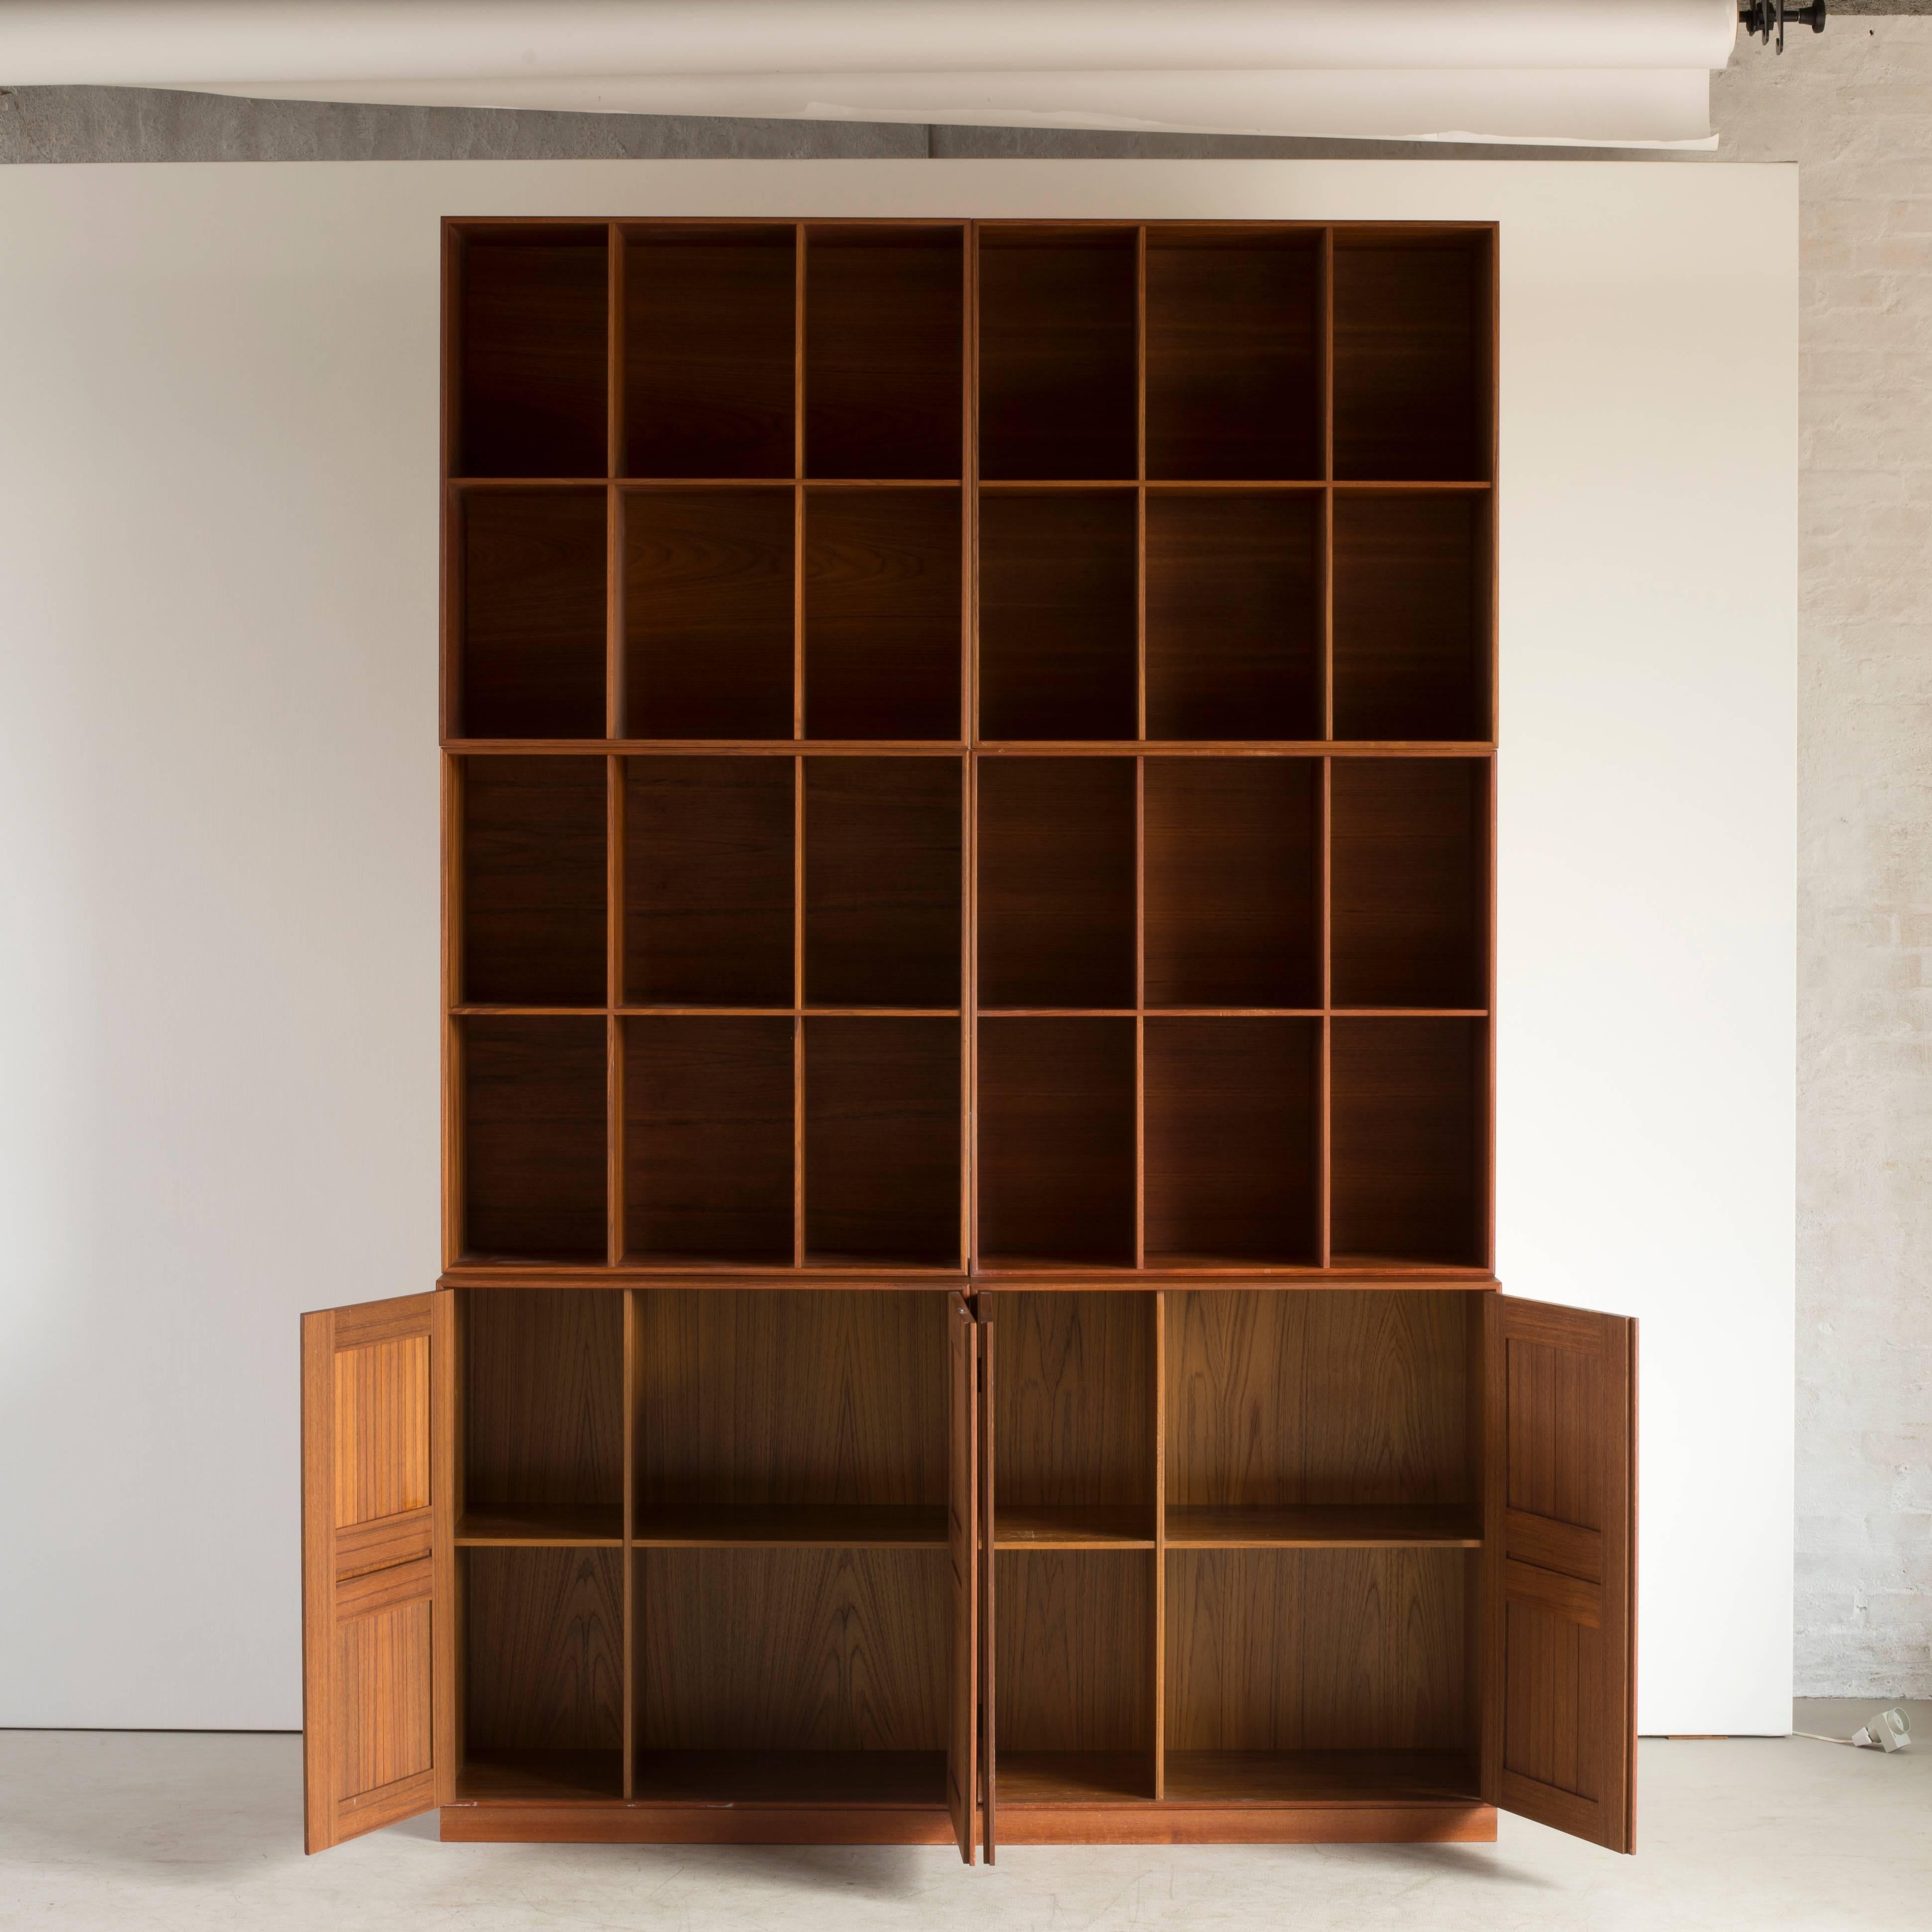 Mogens Koch cabinets and bookcases in Teak.  Executed by Rud. Rasmussen.

Reverse with paper labels ‘RUD. RASMUSSENS/SNEDKERIER/KØBENHAVN/DENMARK.